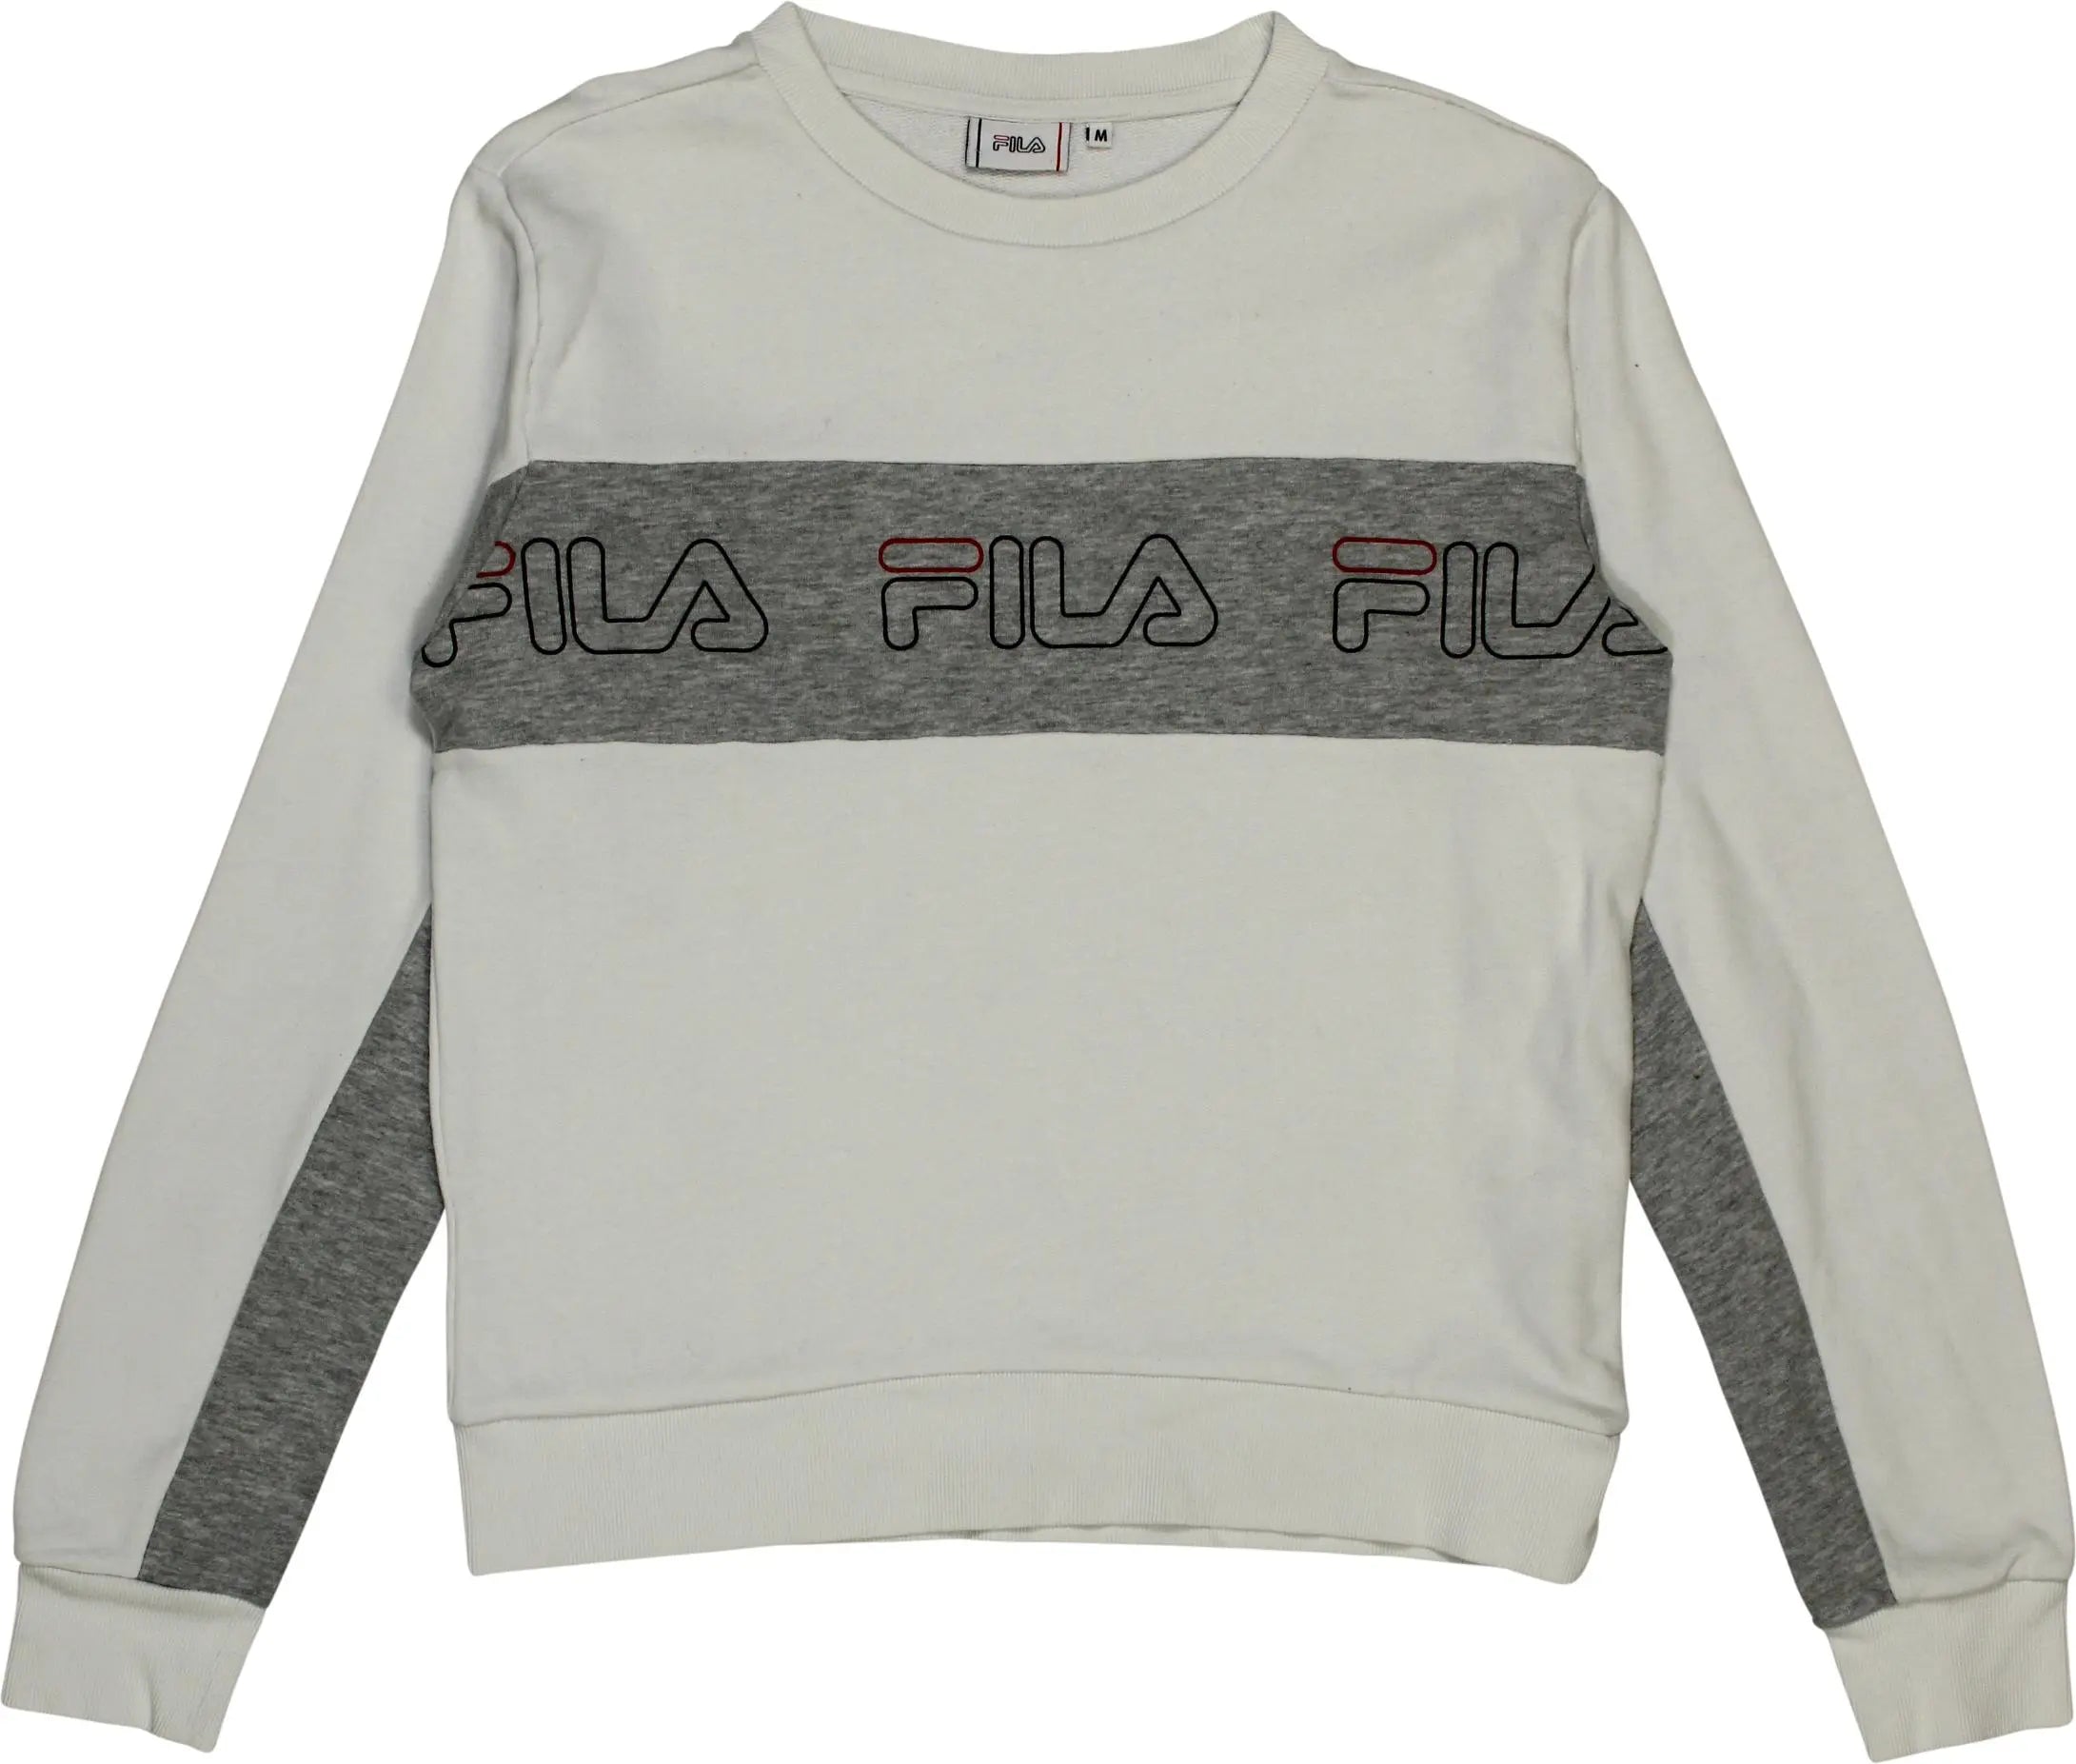 Fila - White Fila Sweatshirt- ThriftTale.com - Vintage and second handclothing